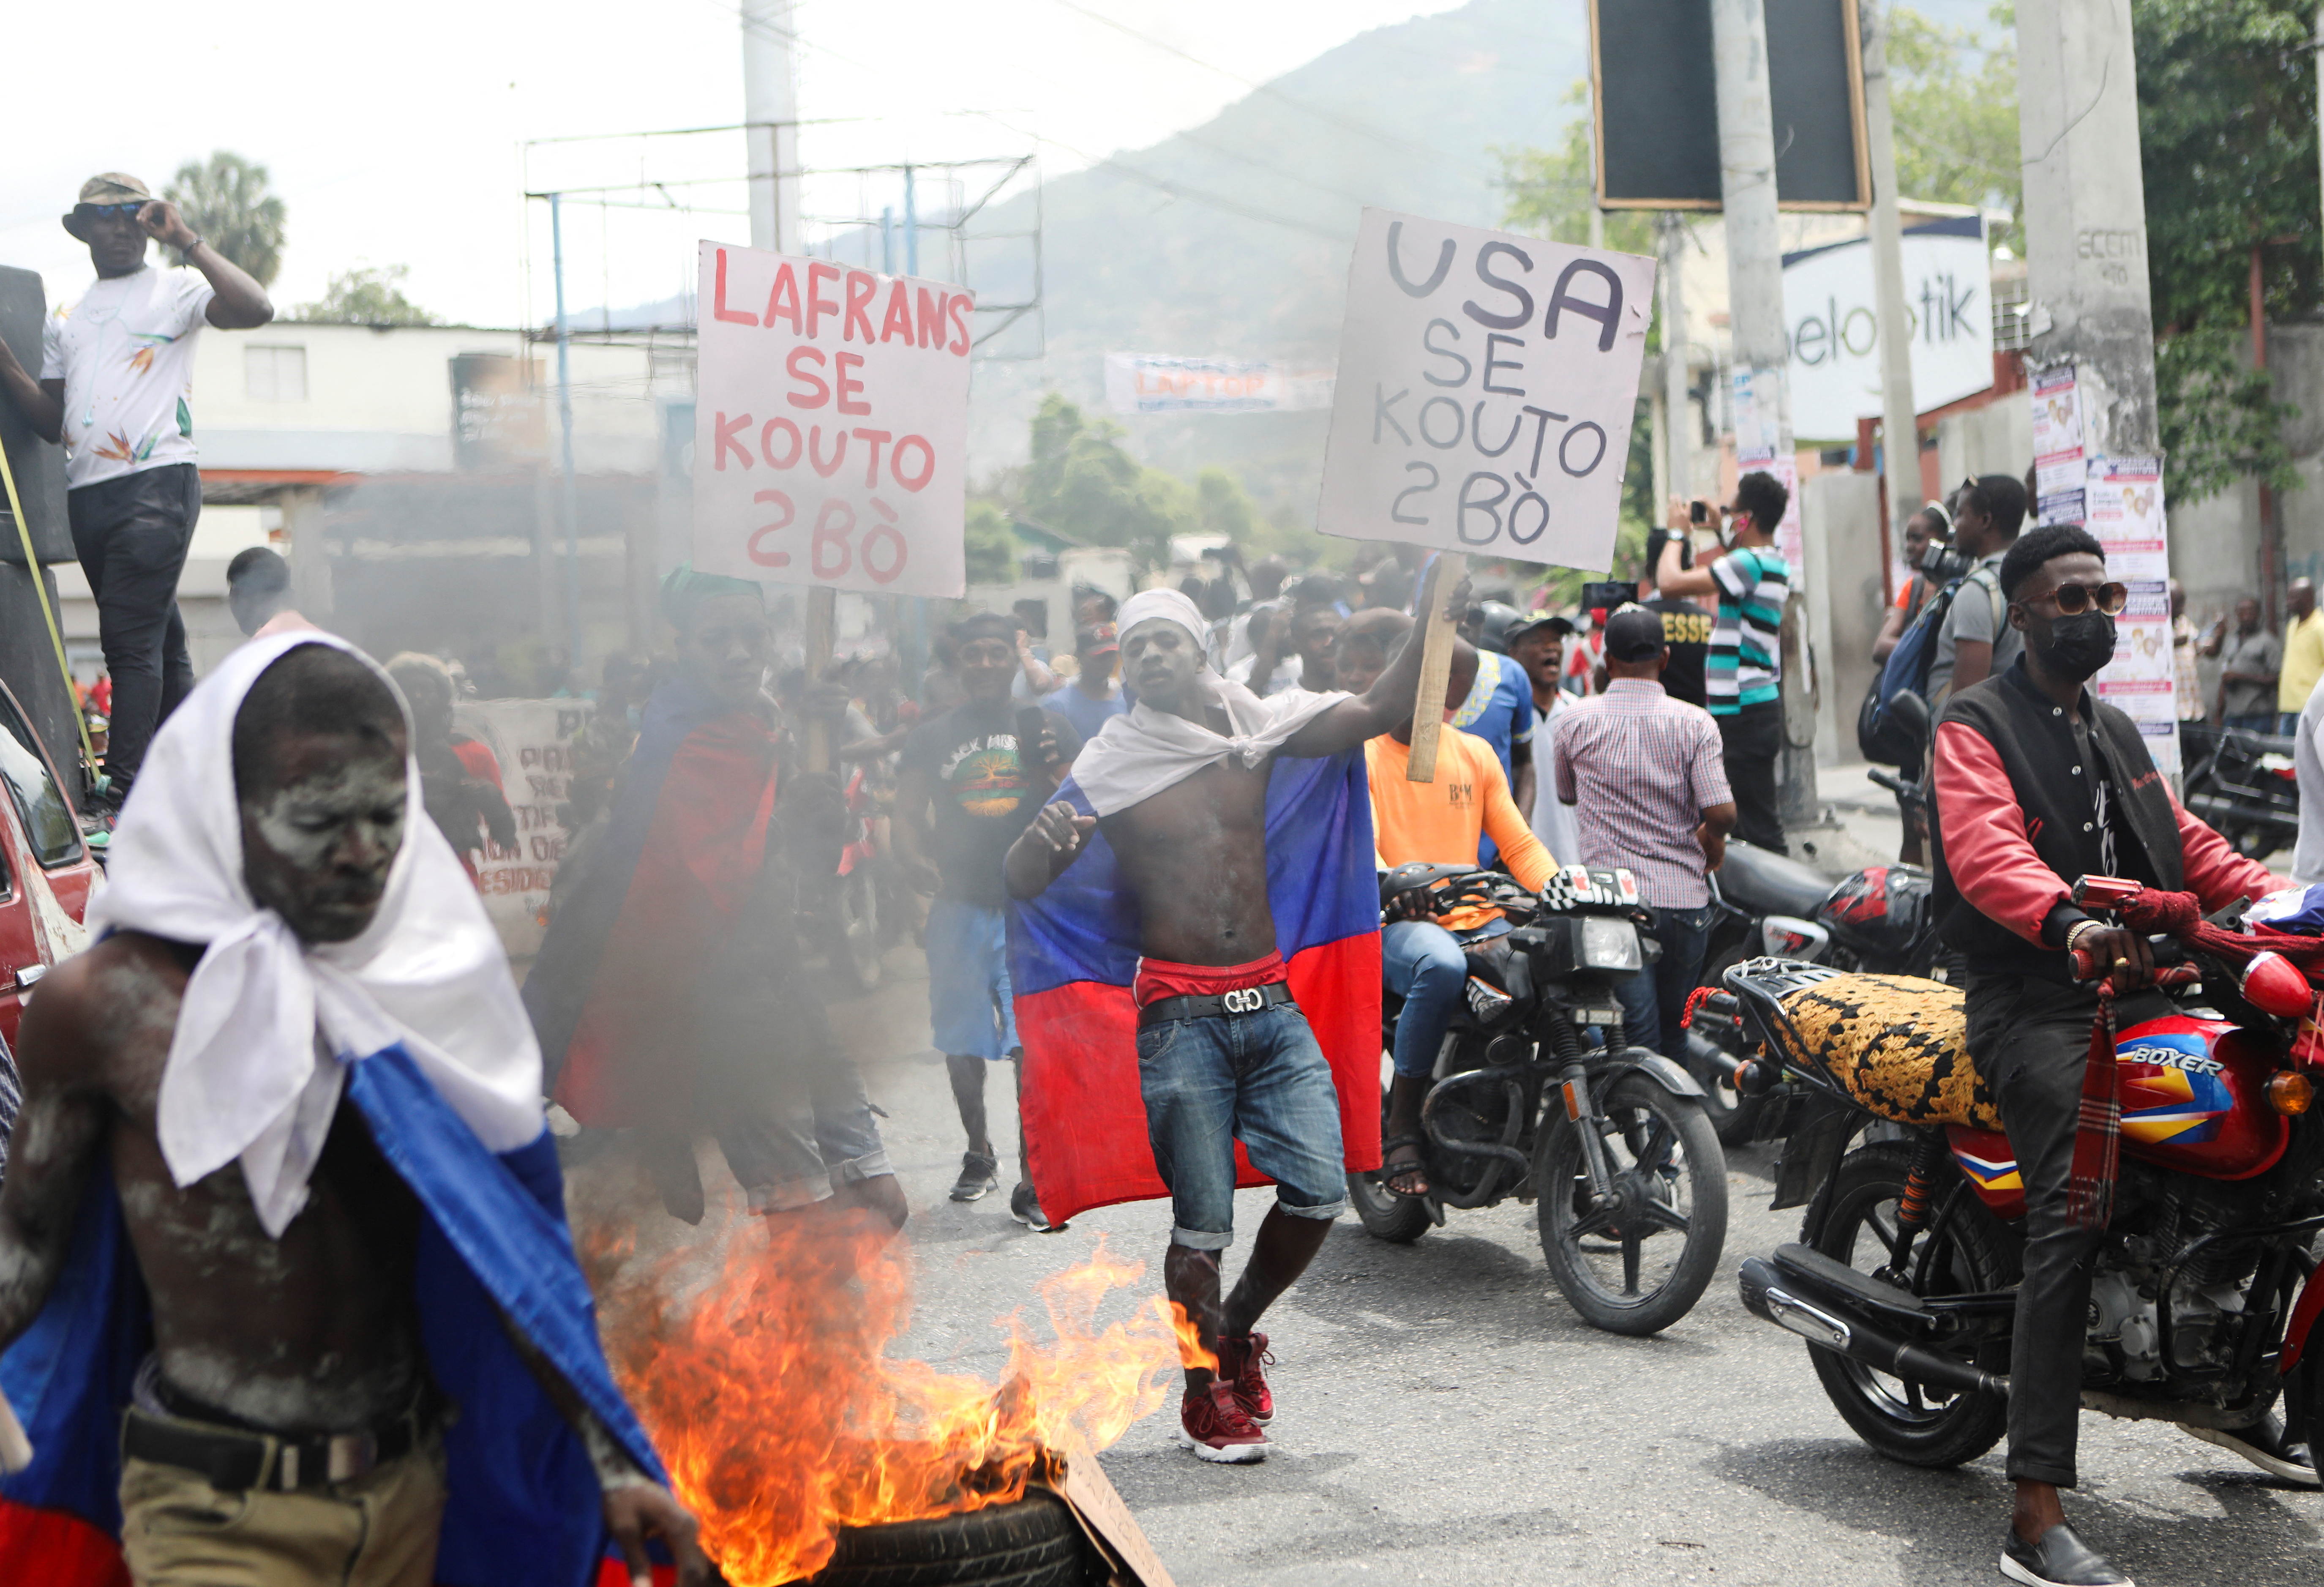 Haiti Protesters Burn Plane Belonging to U.S. Missionary Group Agape Flights